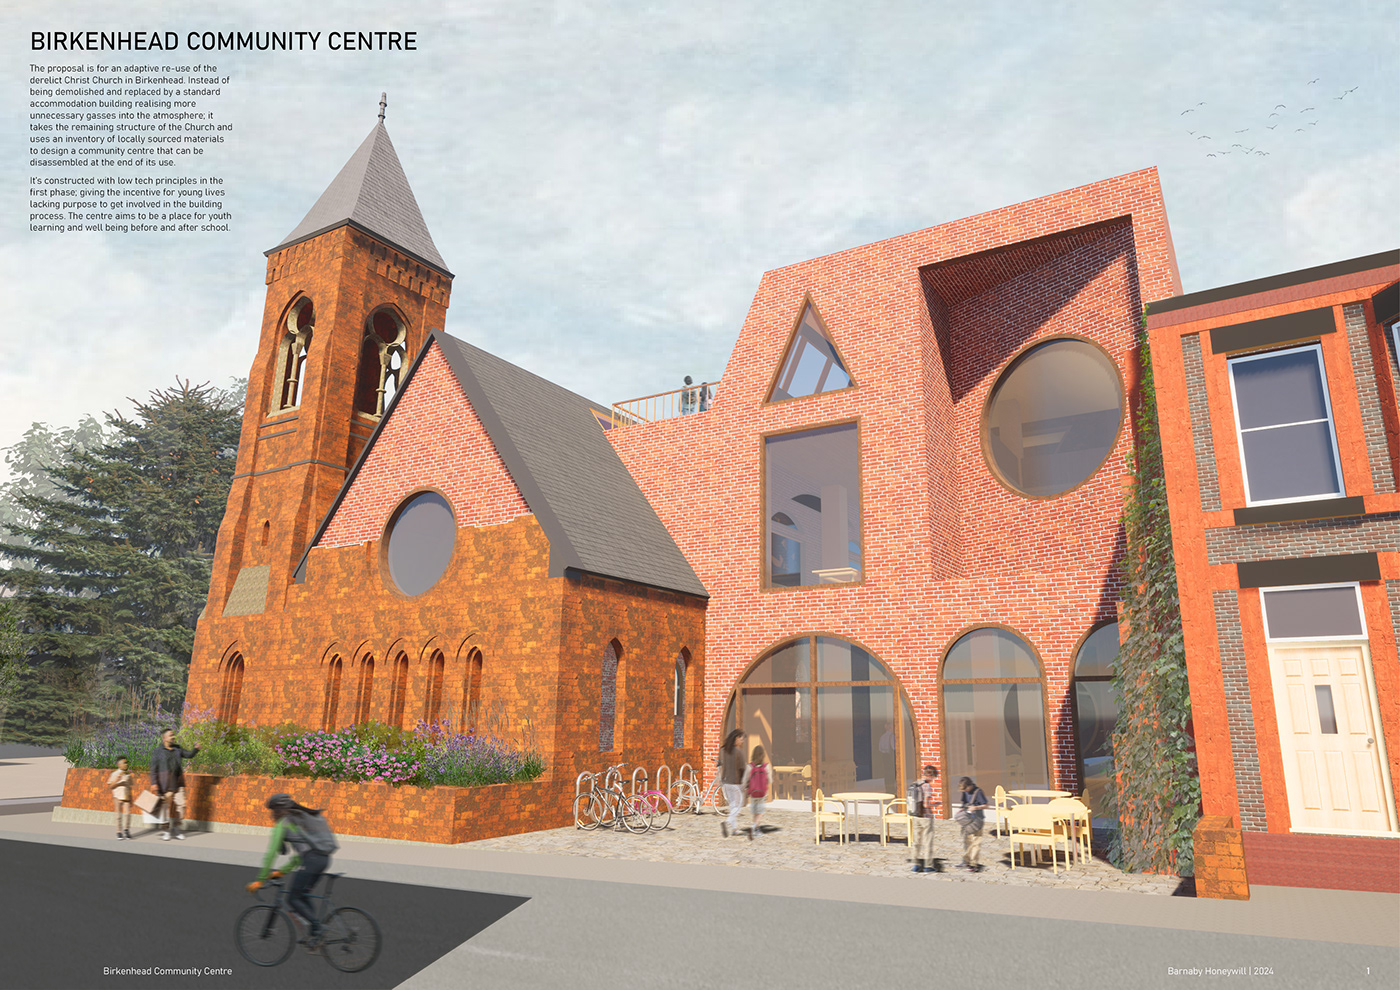 community regeneration Sustainability Wellness heritage architecture church Adaptive design people